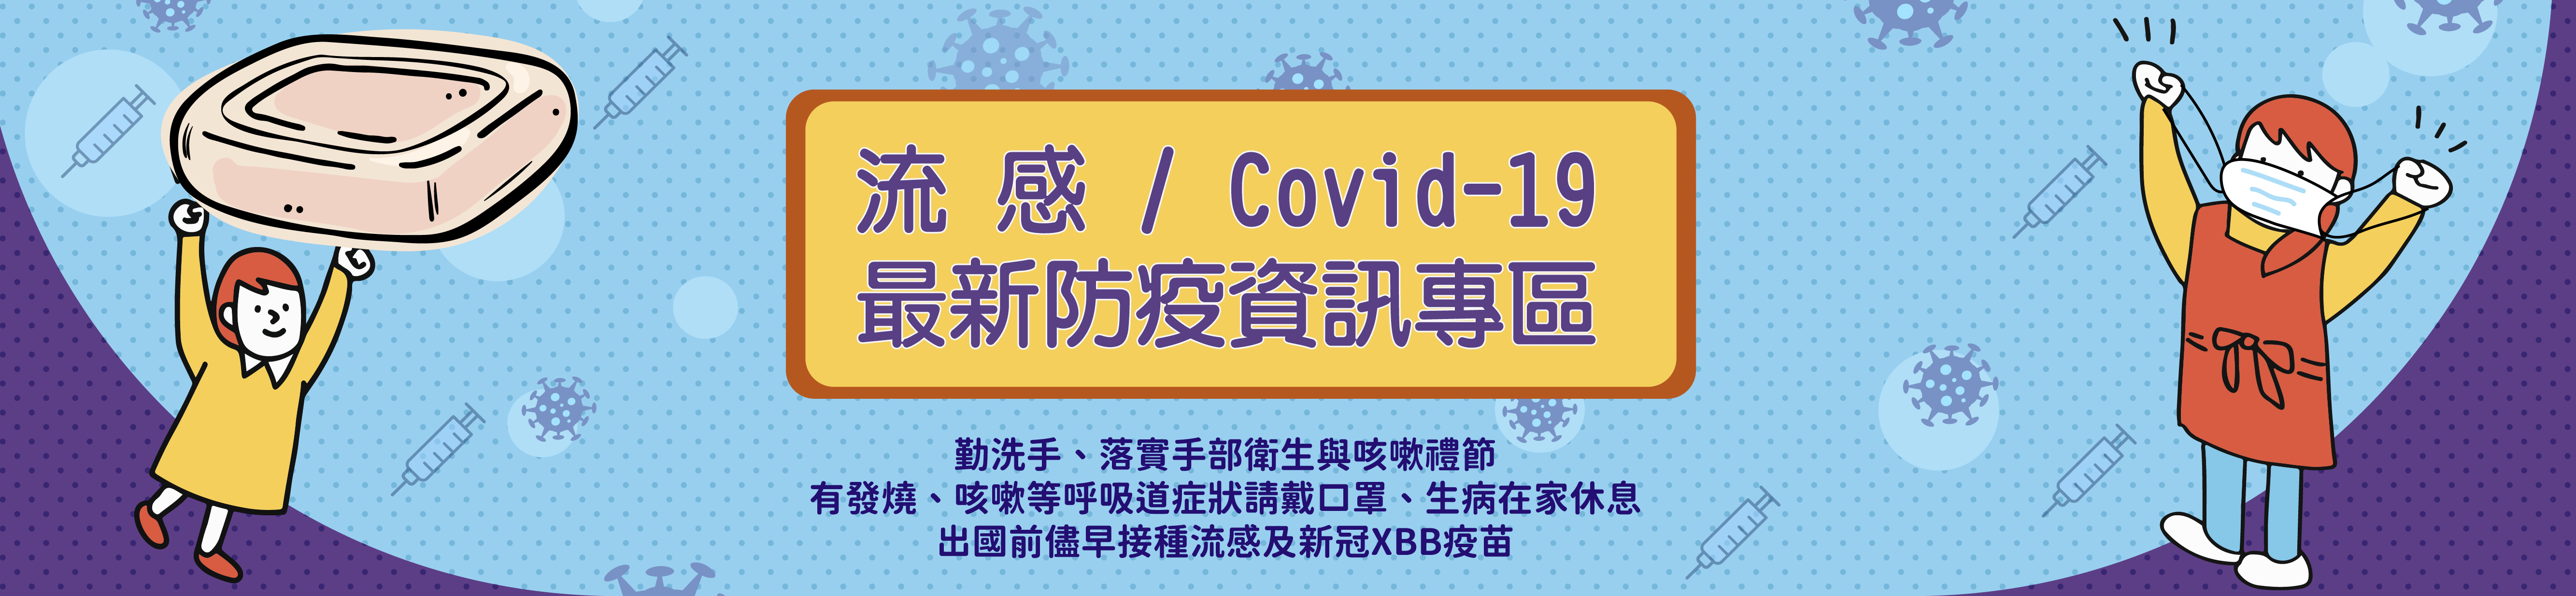 流感及COVID-19防疫專區